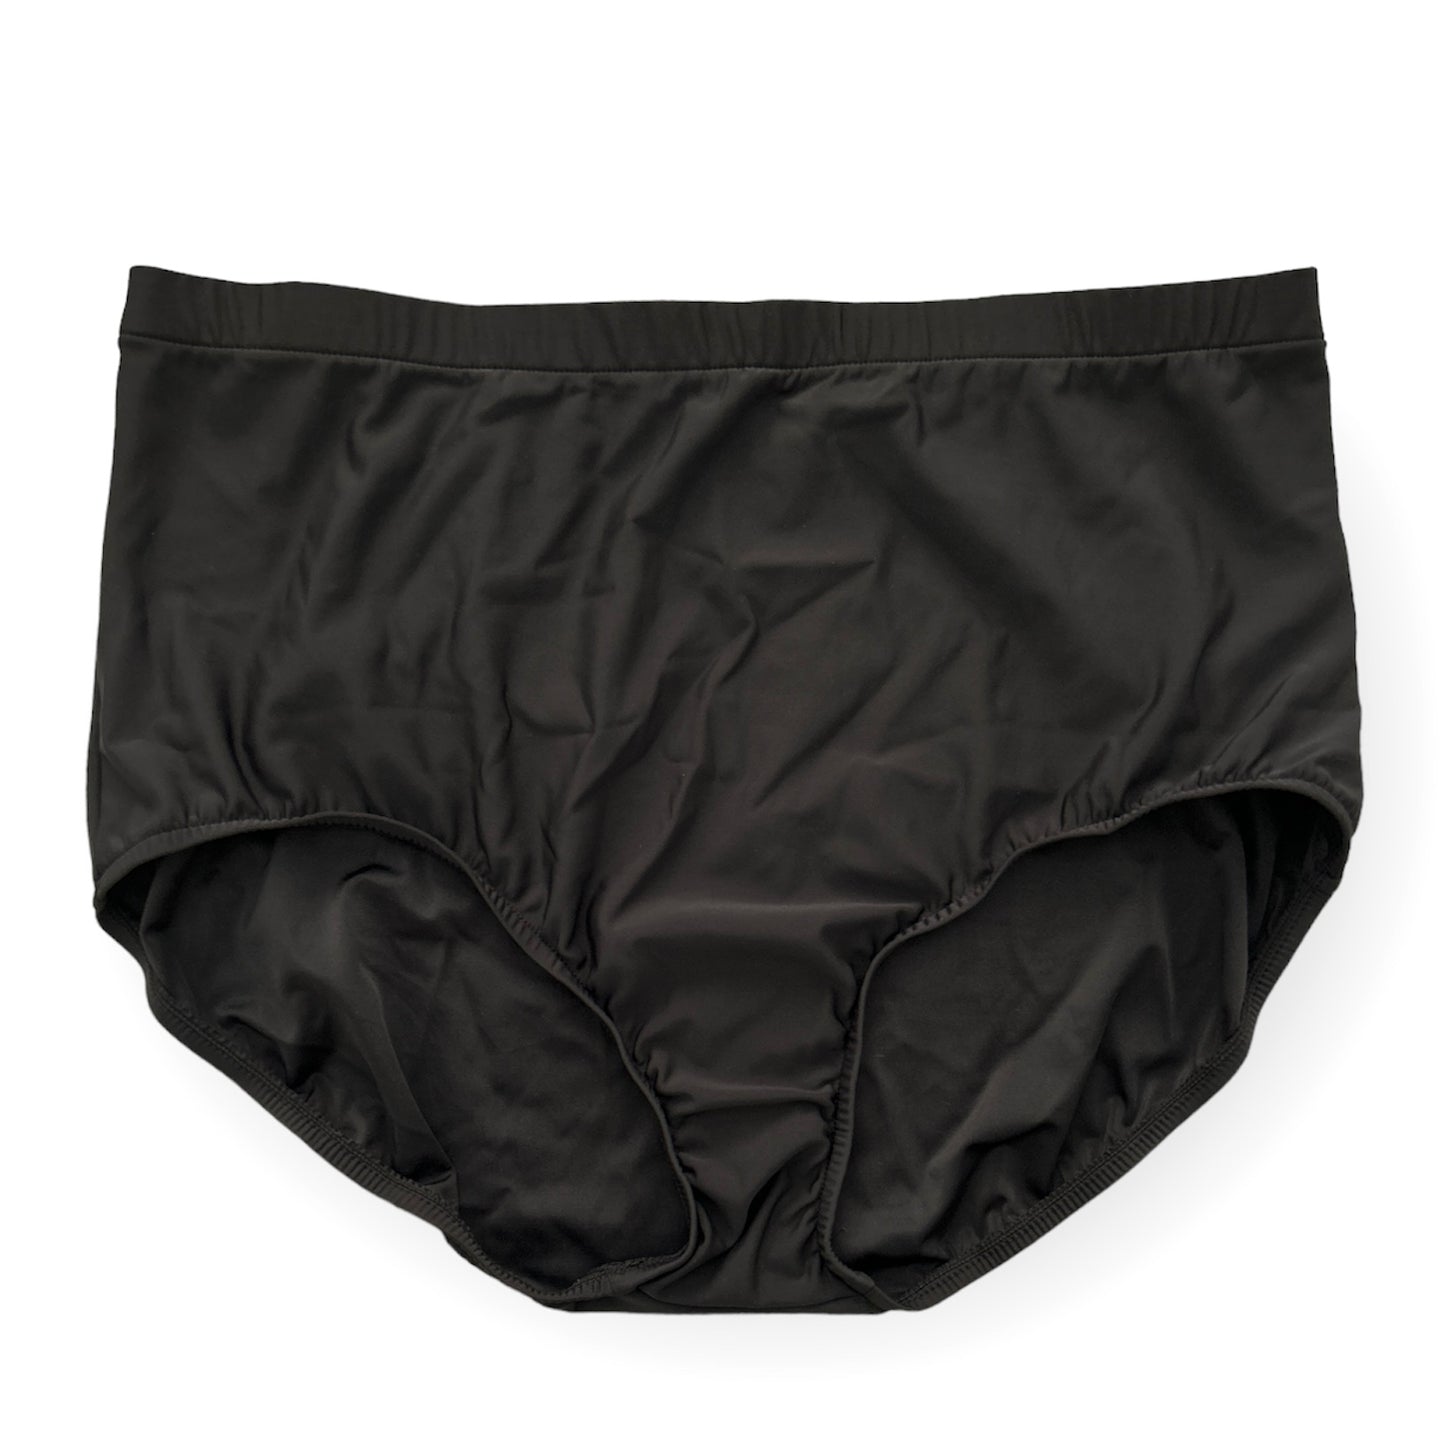 Tankini Set Top/Bottom Women's Swimwear